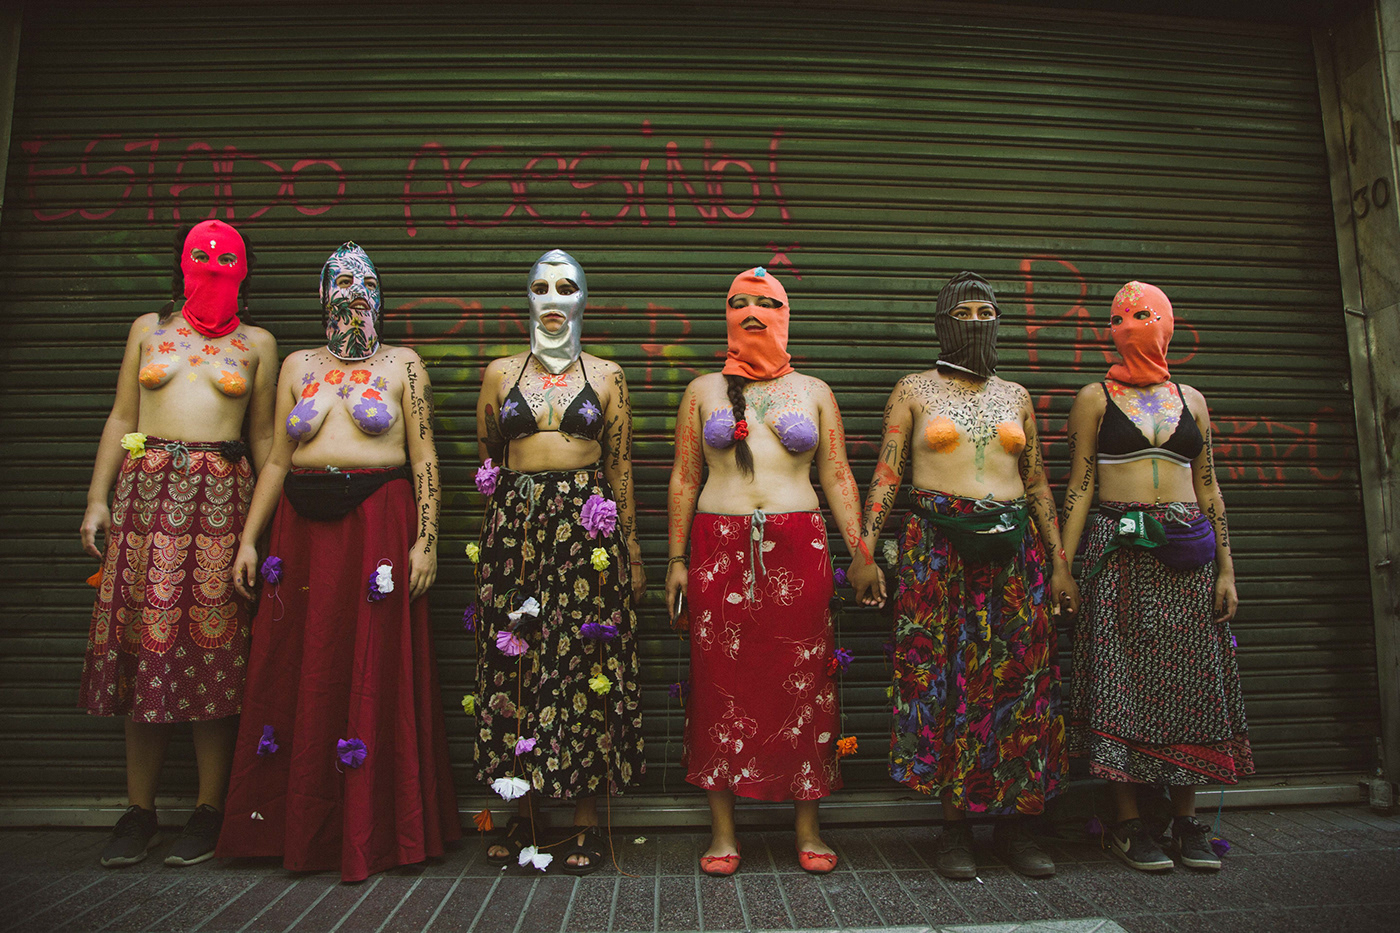 8m 8march editorial feminismo Fotografia fotografiacallejera fotografiadocumental fotoreportaje photojournalism  Santiago de Chile